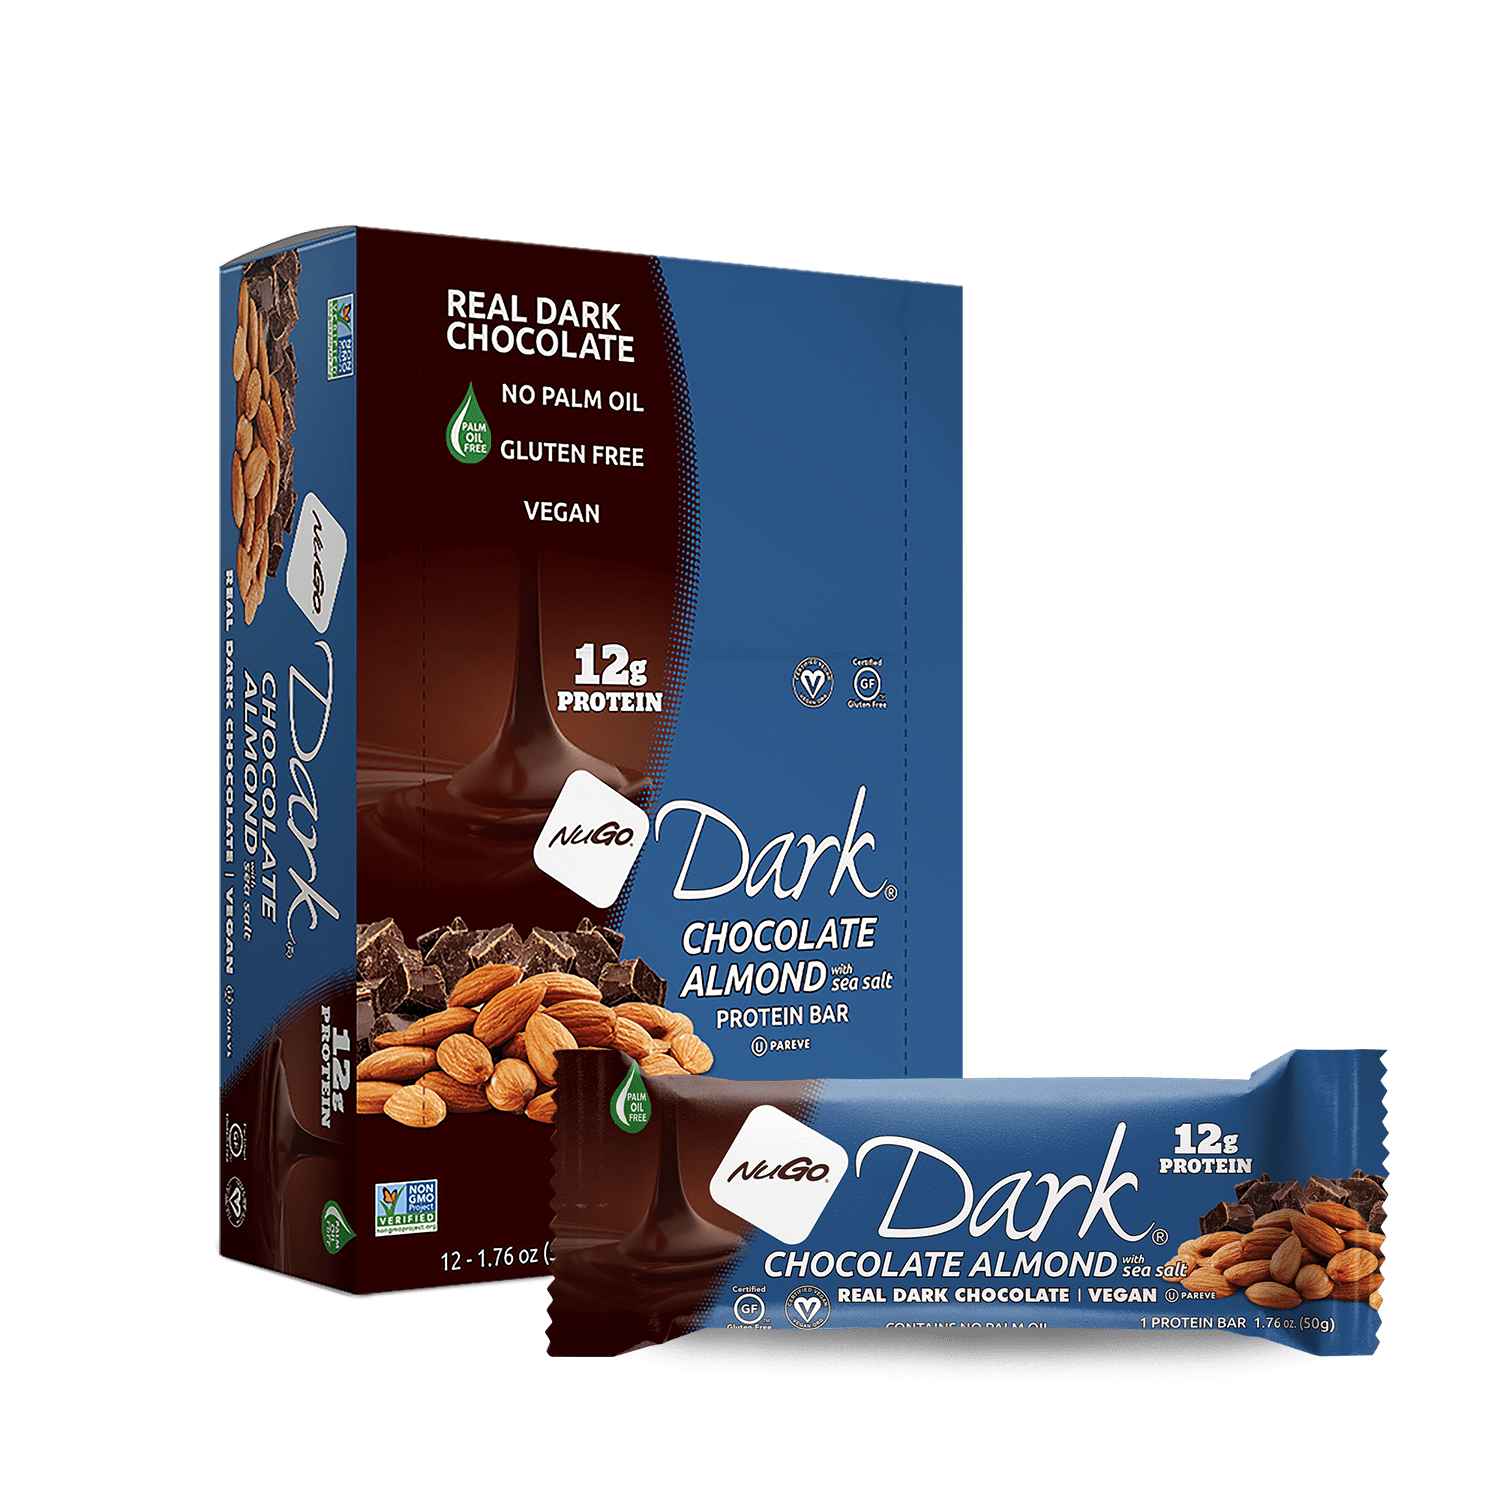 NuGo Dark Chocolate Almond Bar and Box